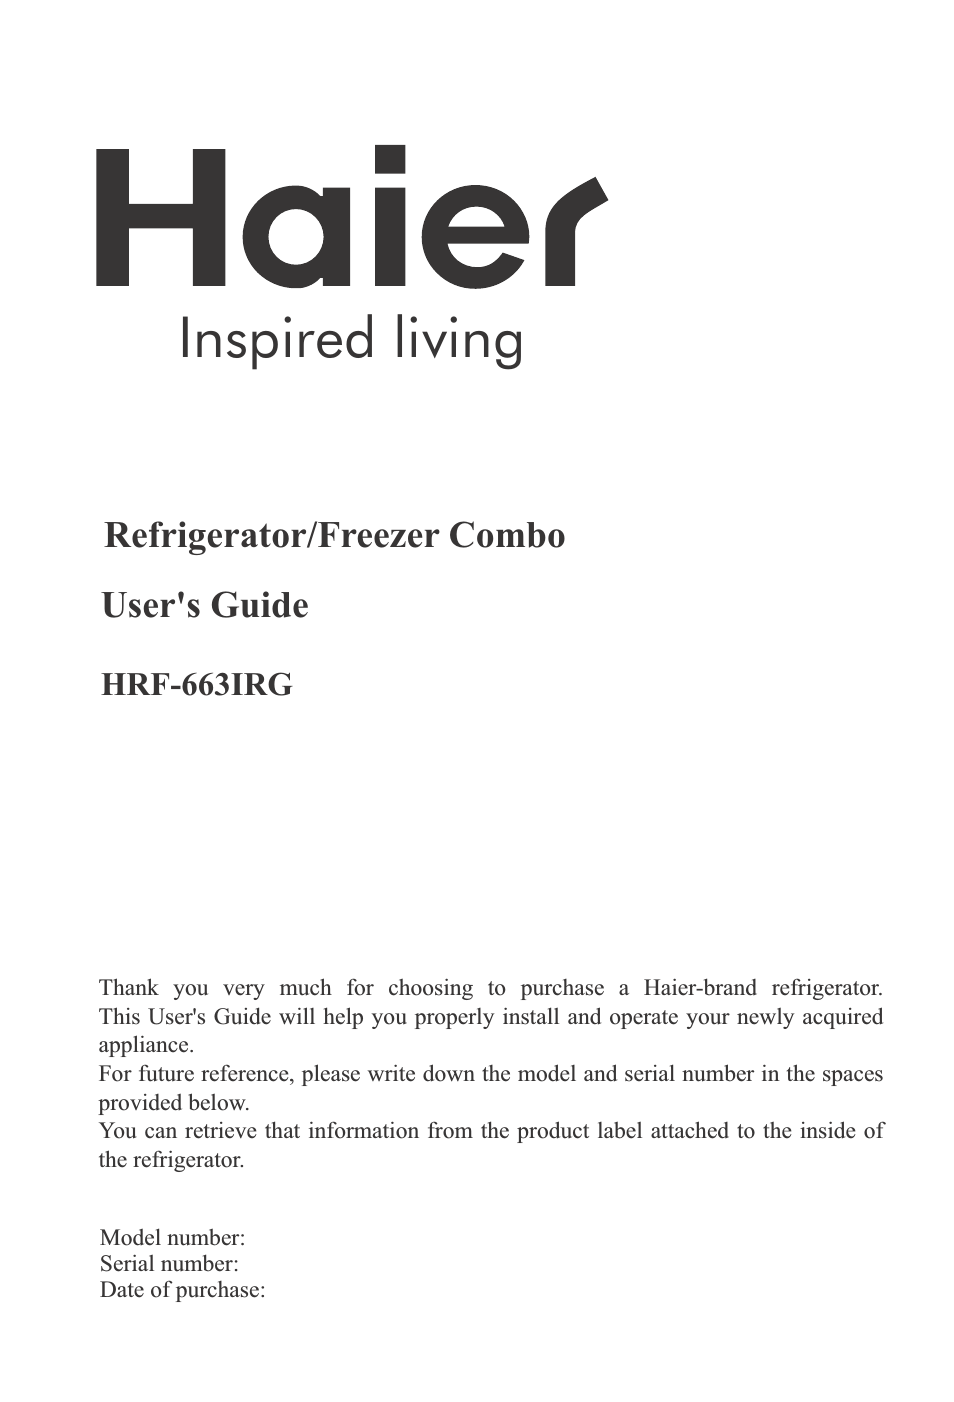 REFRIGERATOR / FREEZER COMBO HRF-6631RG